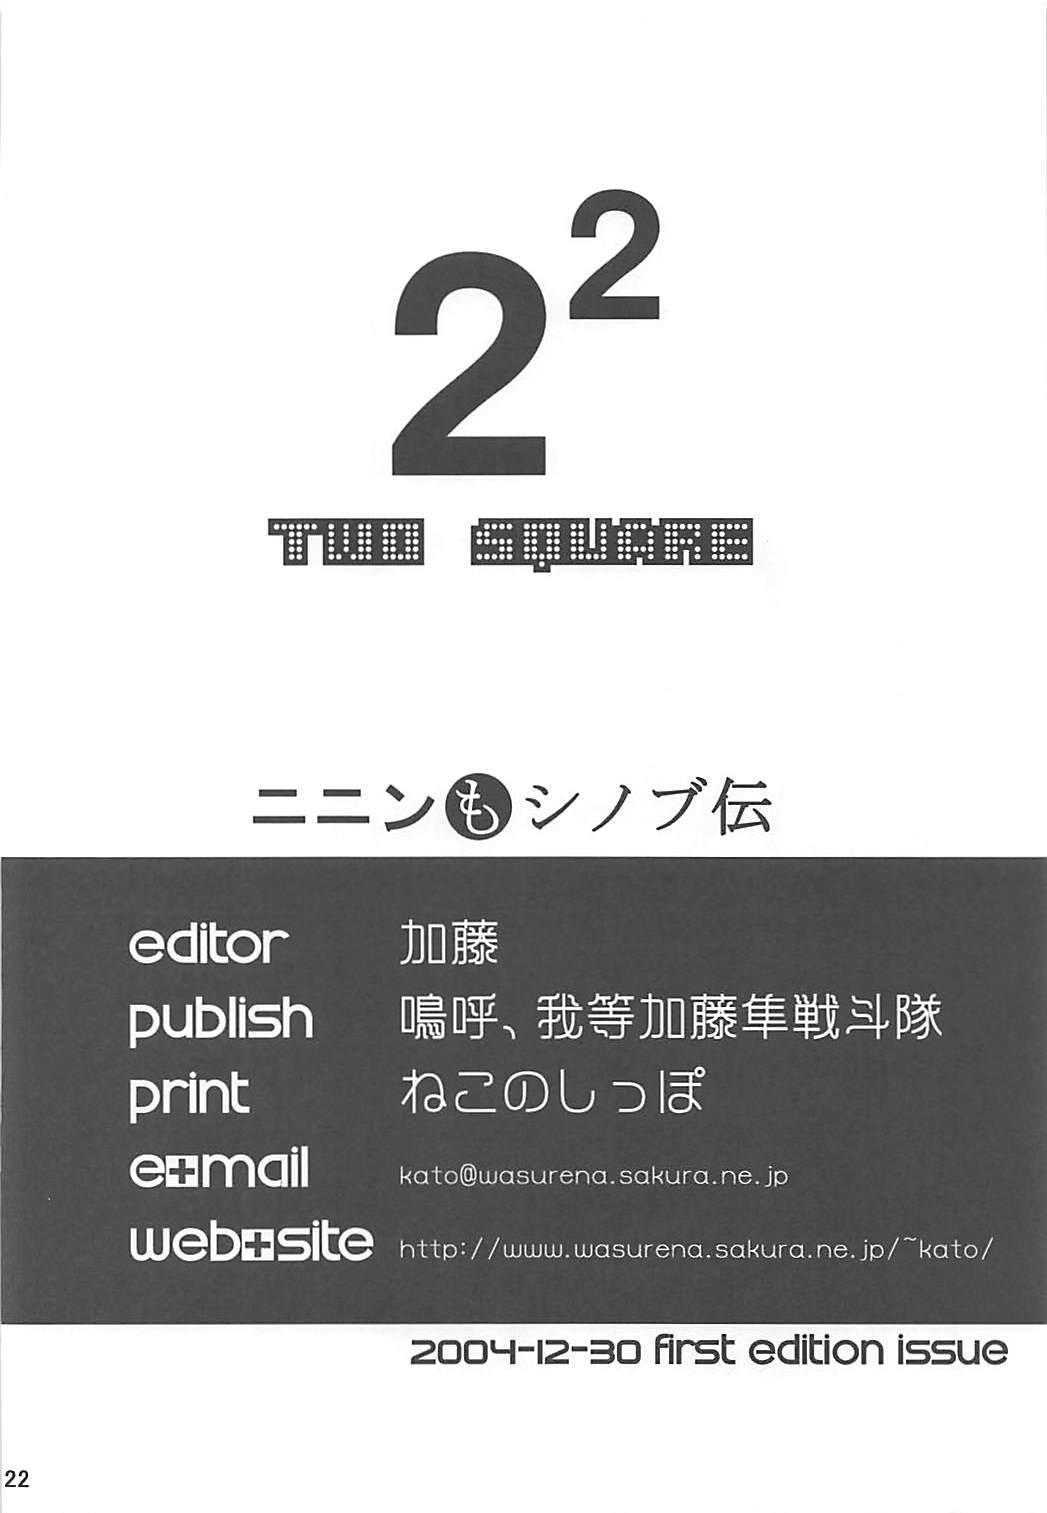 Phat Ass 2²=Shinobuden - 2x2 shinobuden Sexy Girl - Page 21